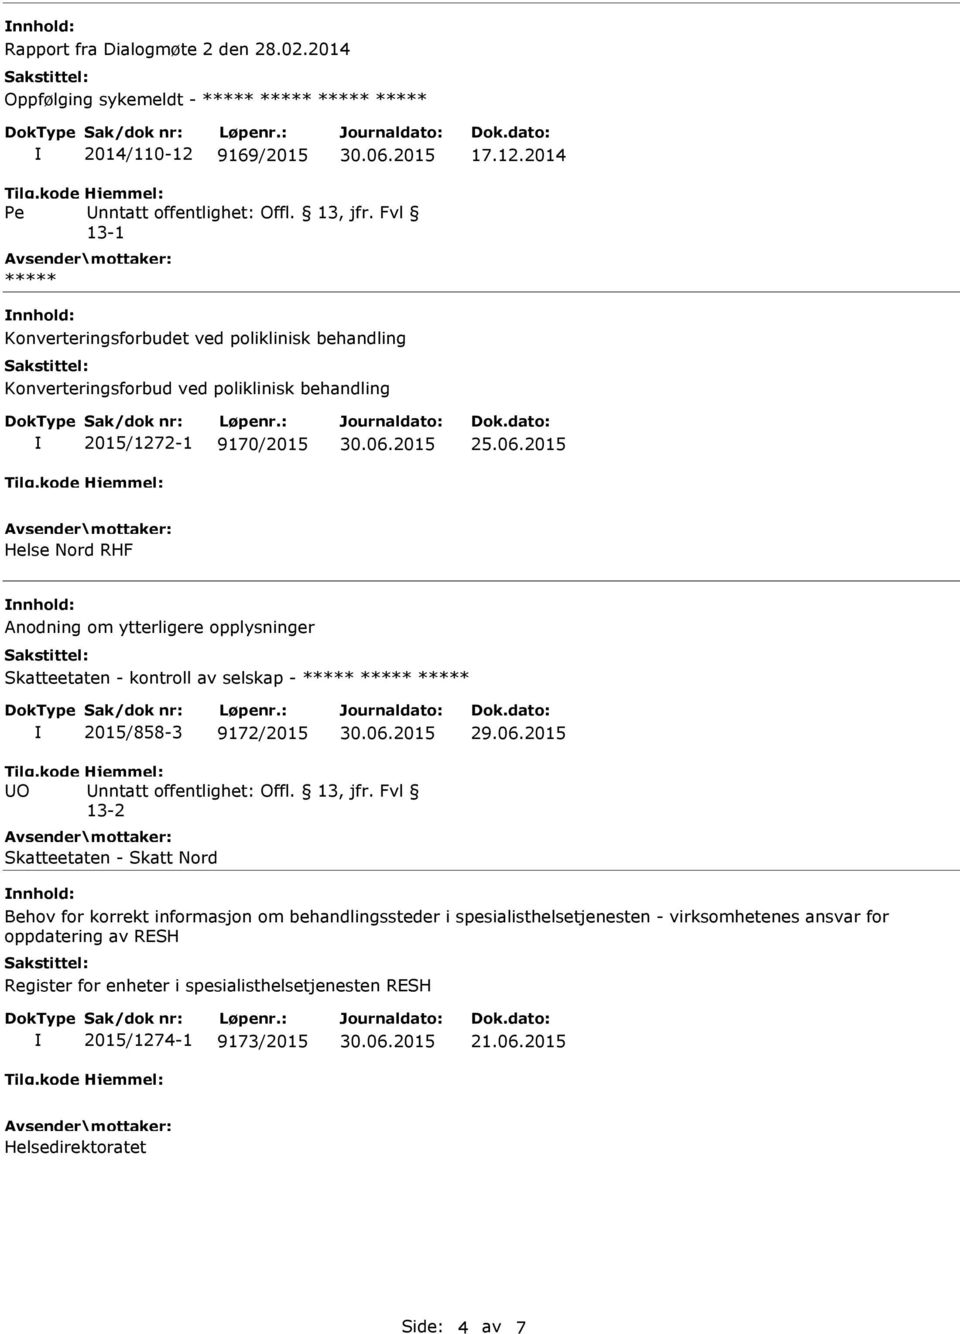 2015 Helse Nord RHF Anodning om ytterligere opplysninger Skatteetaten - kontroll av selskap - ***** ***** ***** 2015/858-3 9172/2015 29.06.2015 O nntatt offentlighet: Offl. 13, jfr.